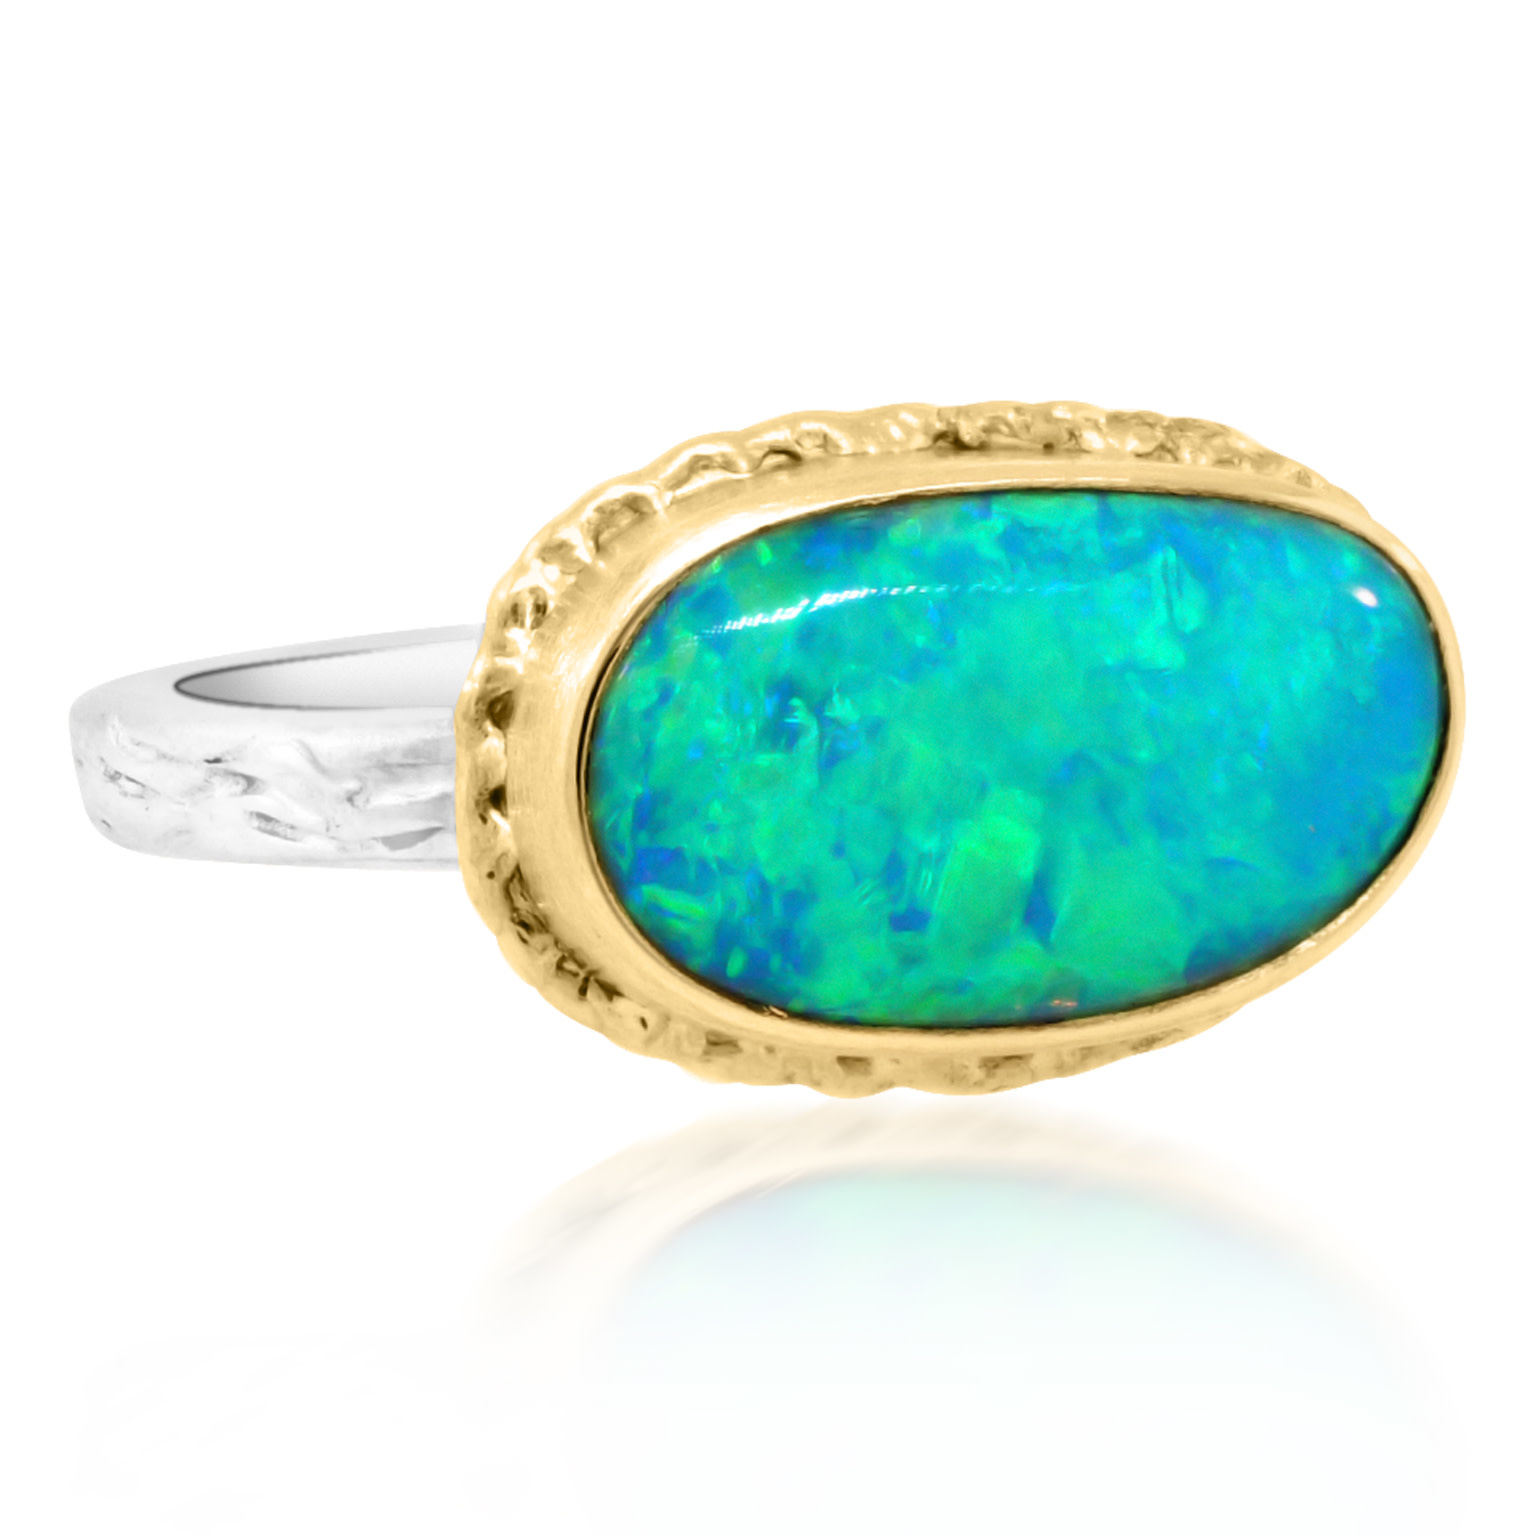 Jamie Joseph Jewelry Designs Oval Crystal Opal Bezel Ring